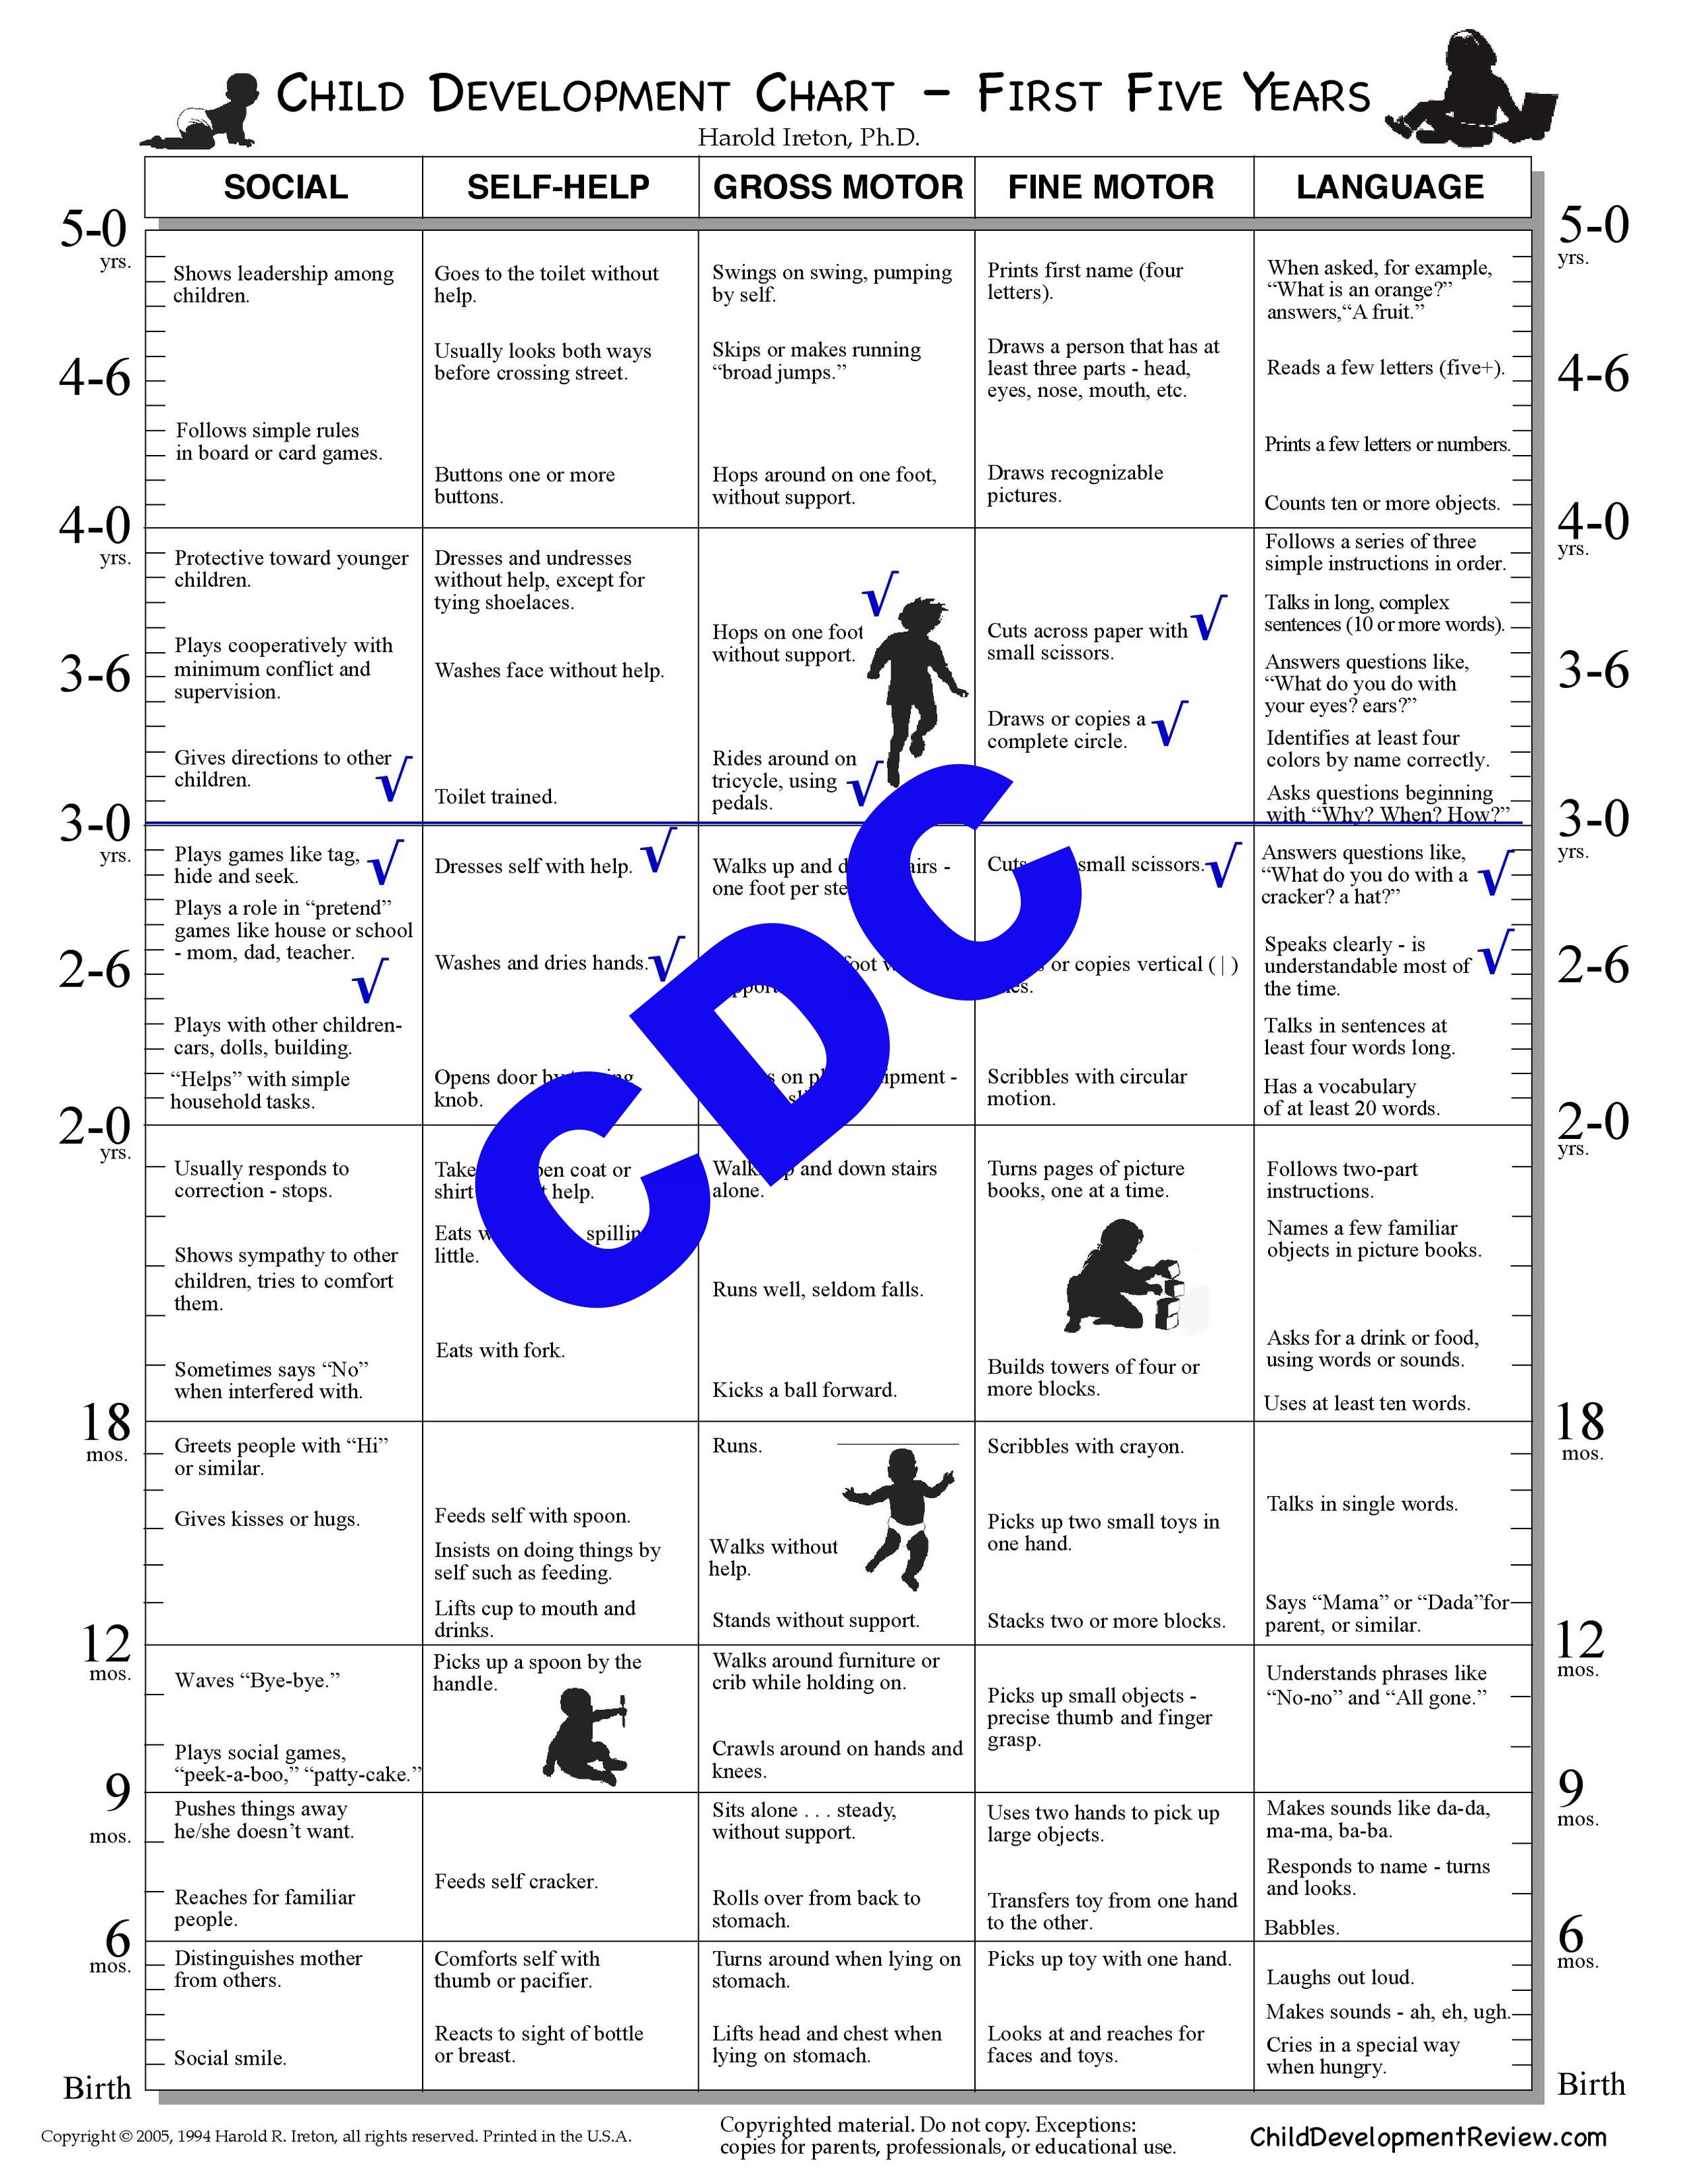 Cdc Milestone Chart